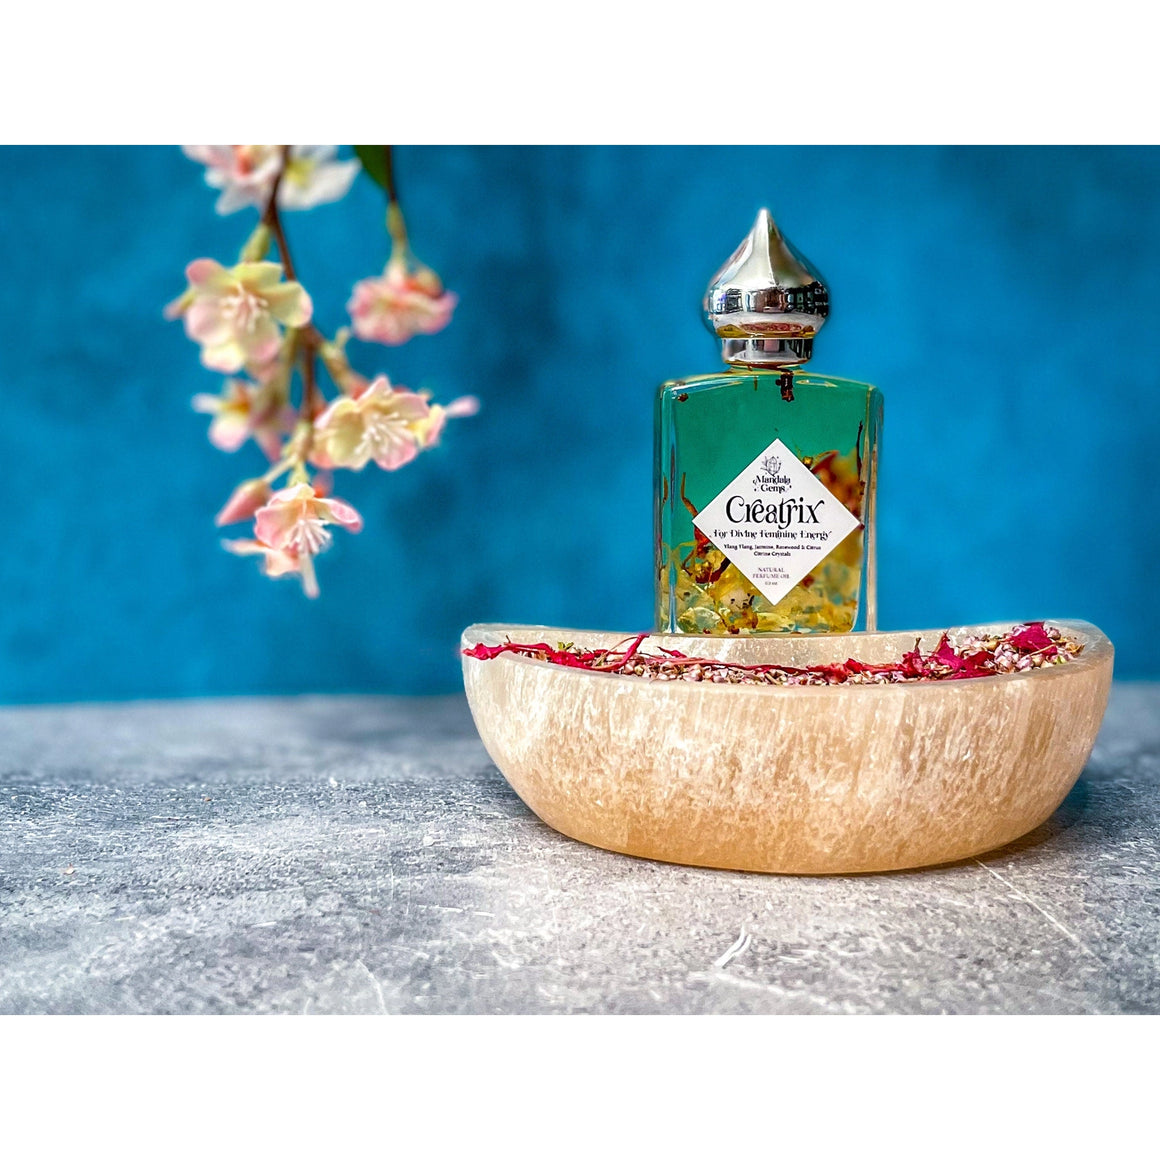 CREATRIX Natural Floral Perfume Oil for Divine Feminine Energy with Jasmine